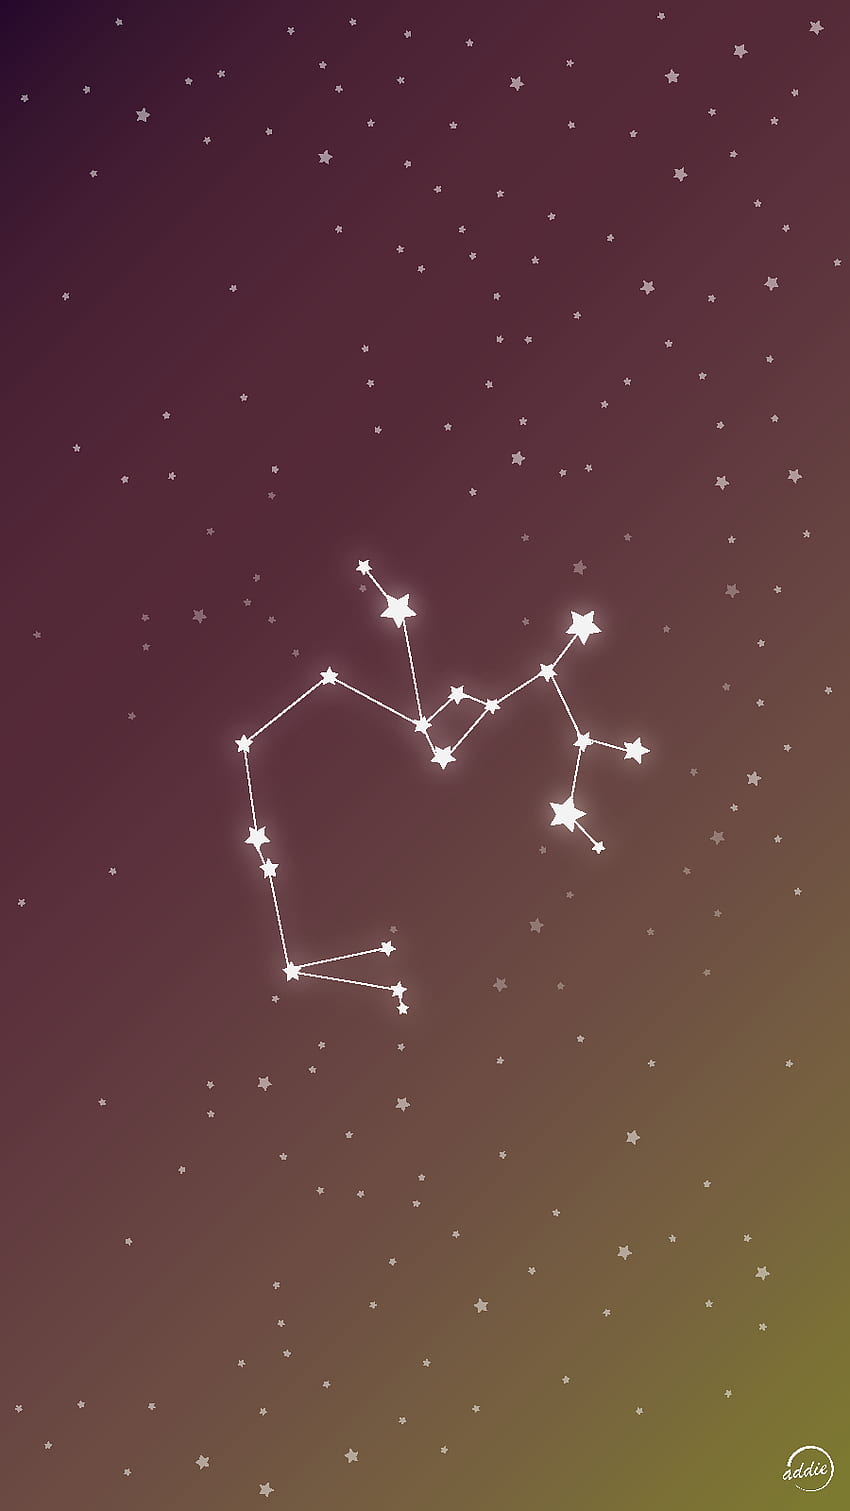 sagittarius star constellation